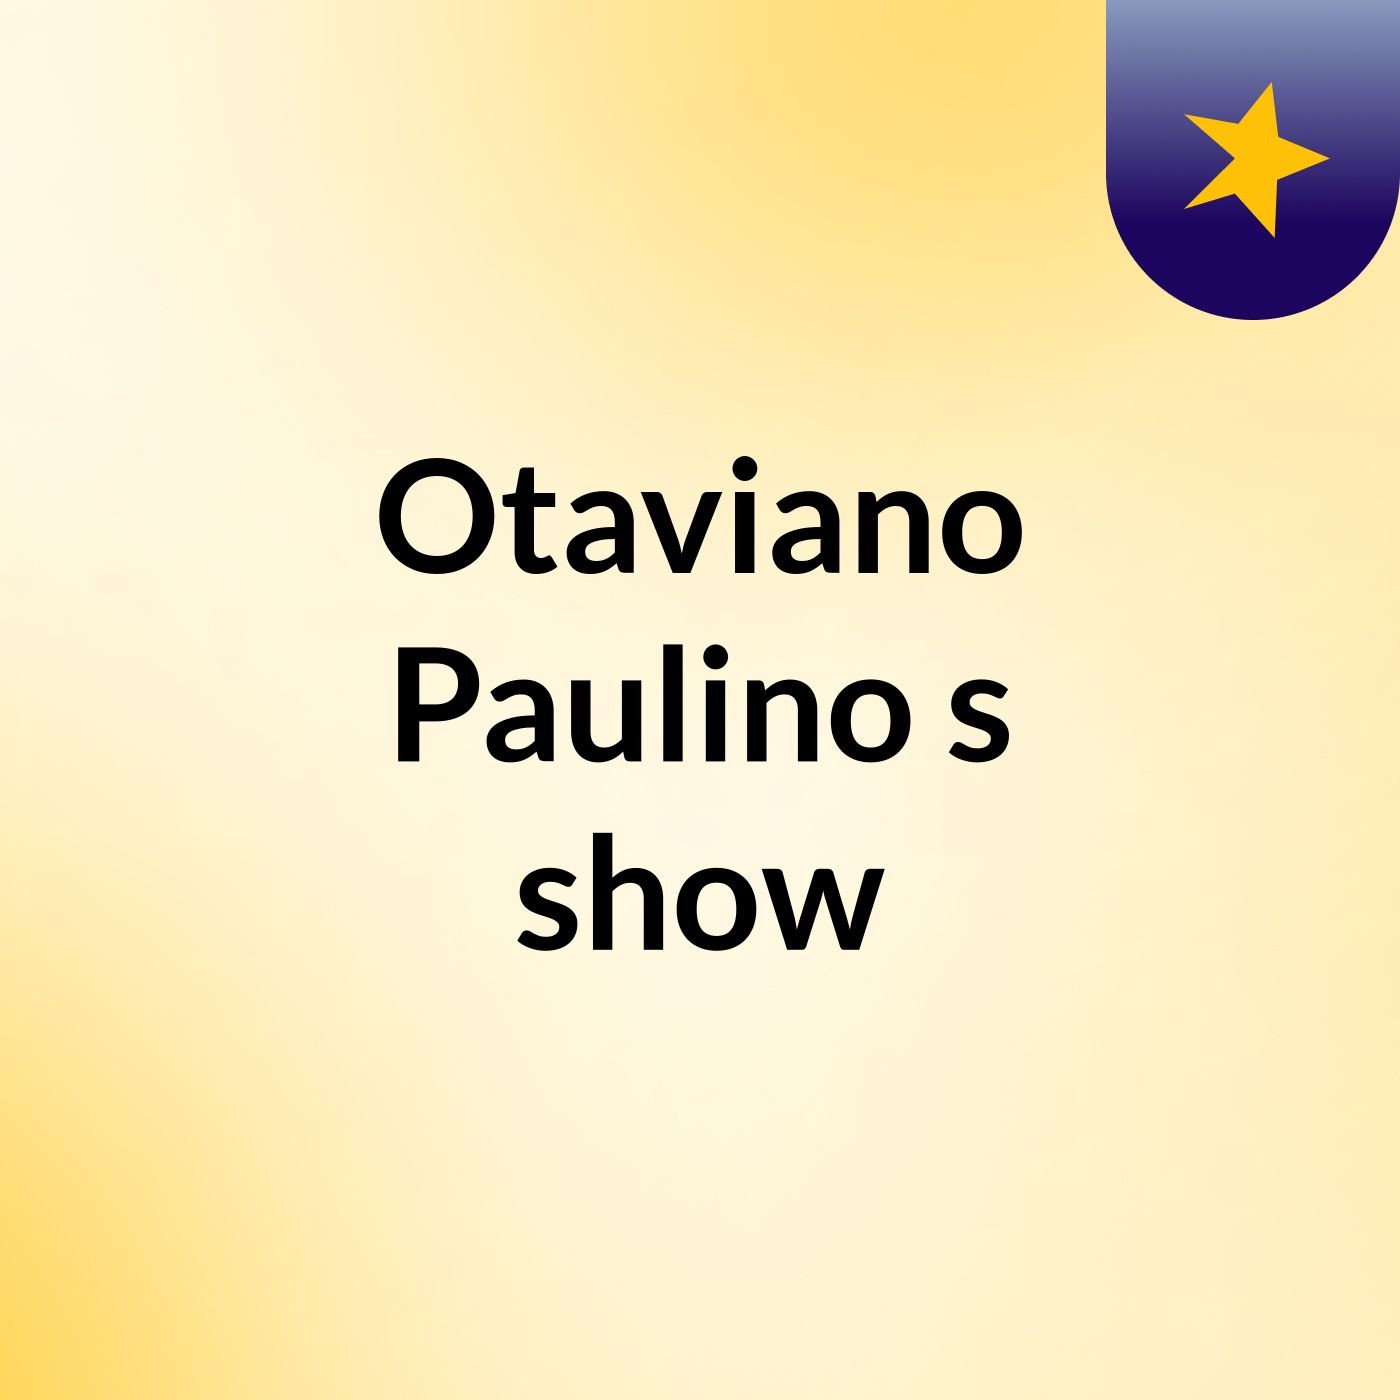 Episódio 26 - Otaviano Paulino's show